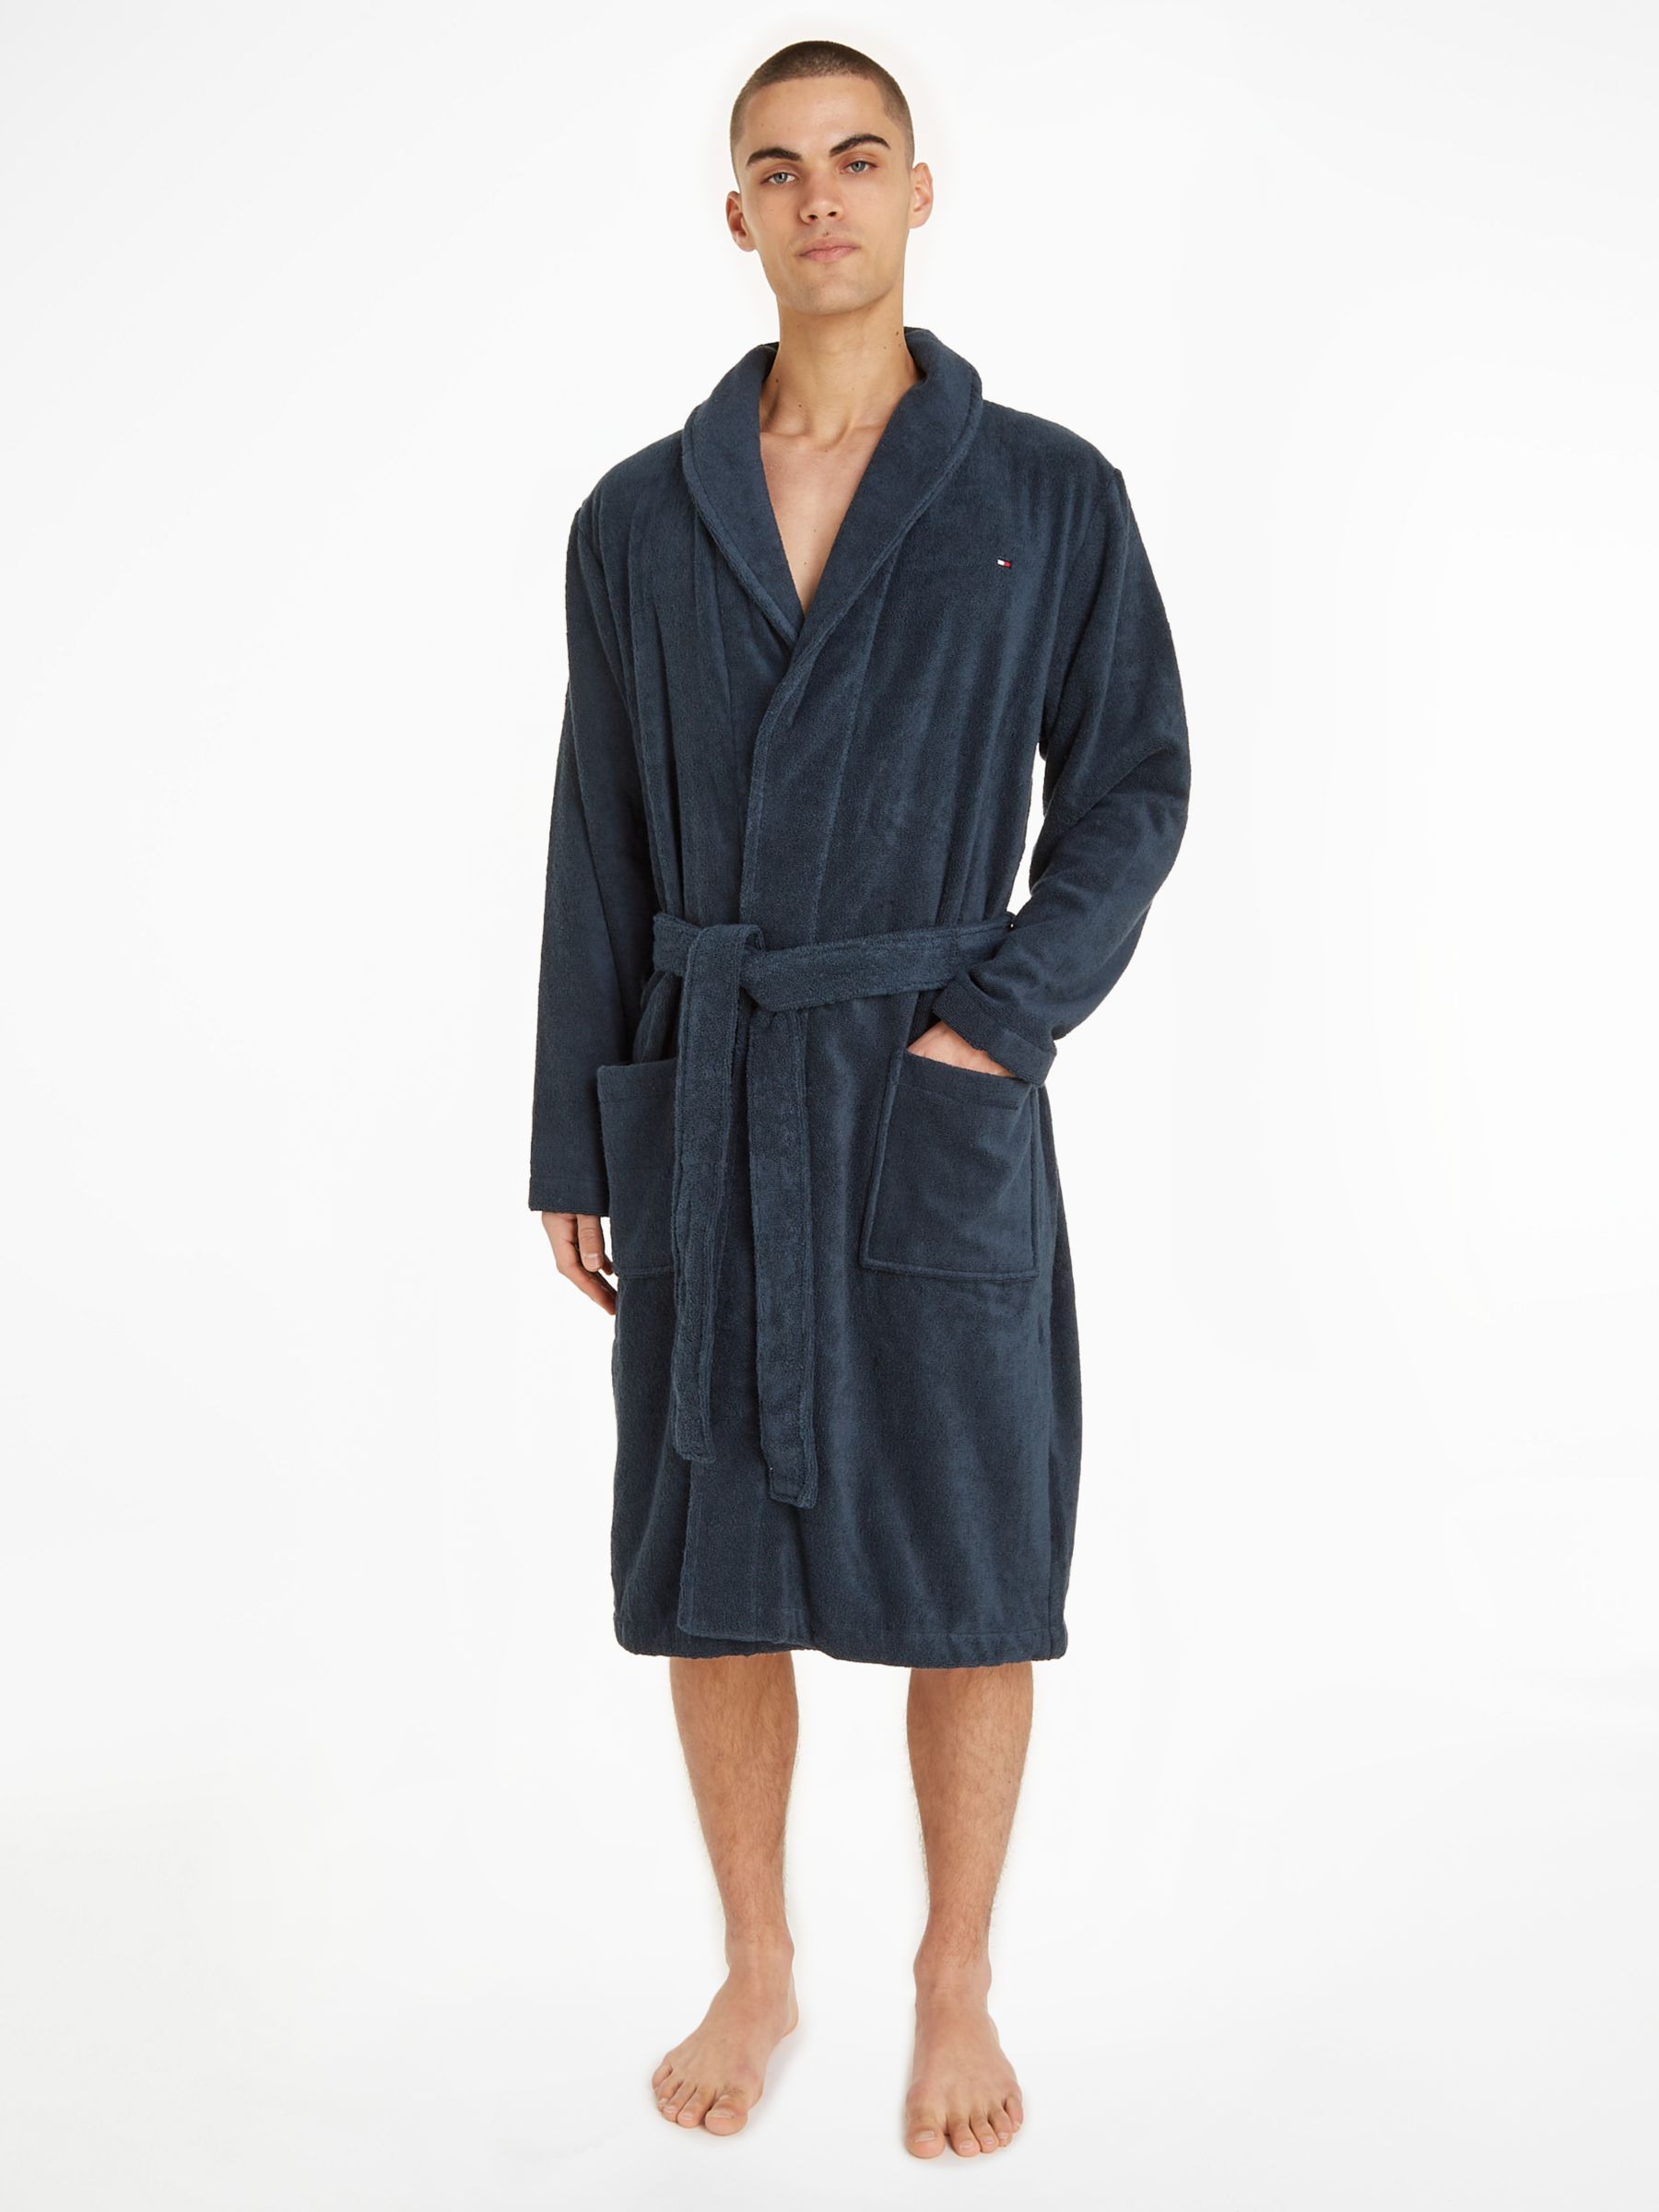 Tommy Hilfiger Men's Pyjamas u0026 Nightwear | John Lewis u0026 Partners